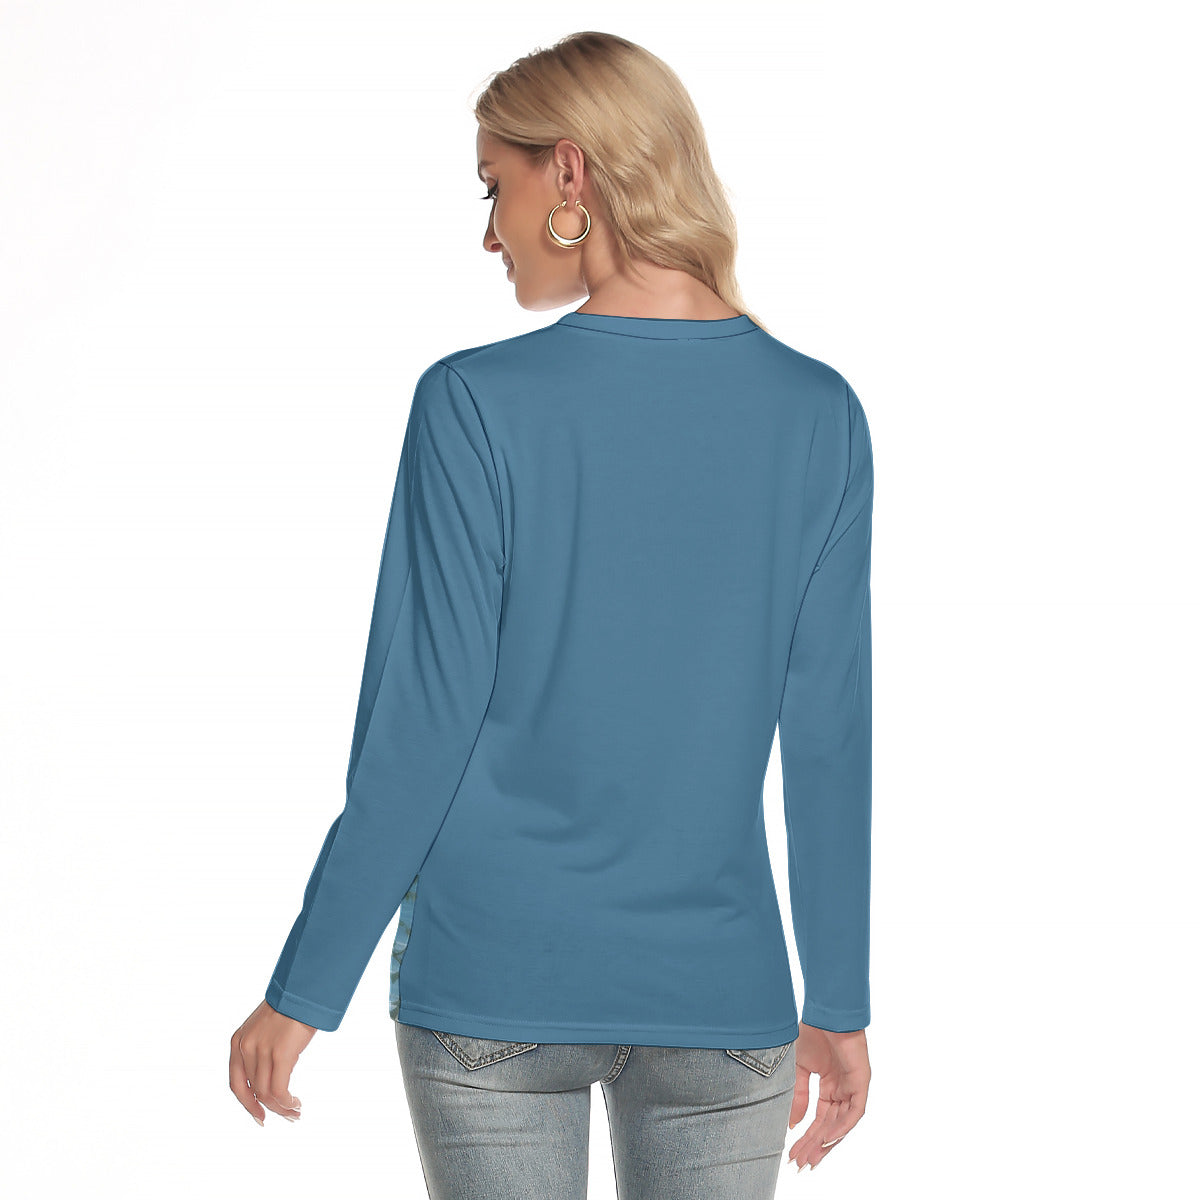 Fantasy 172a -- Women's O-neck Long Sleeve T-shirt